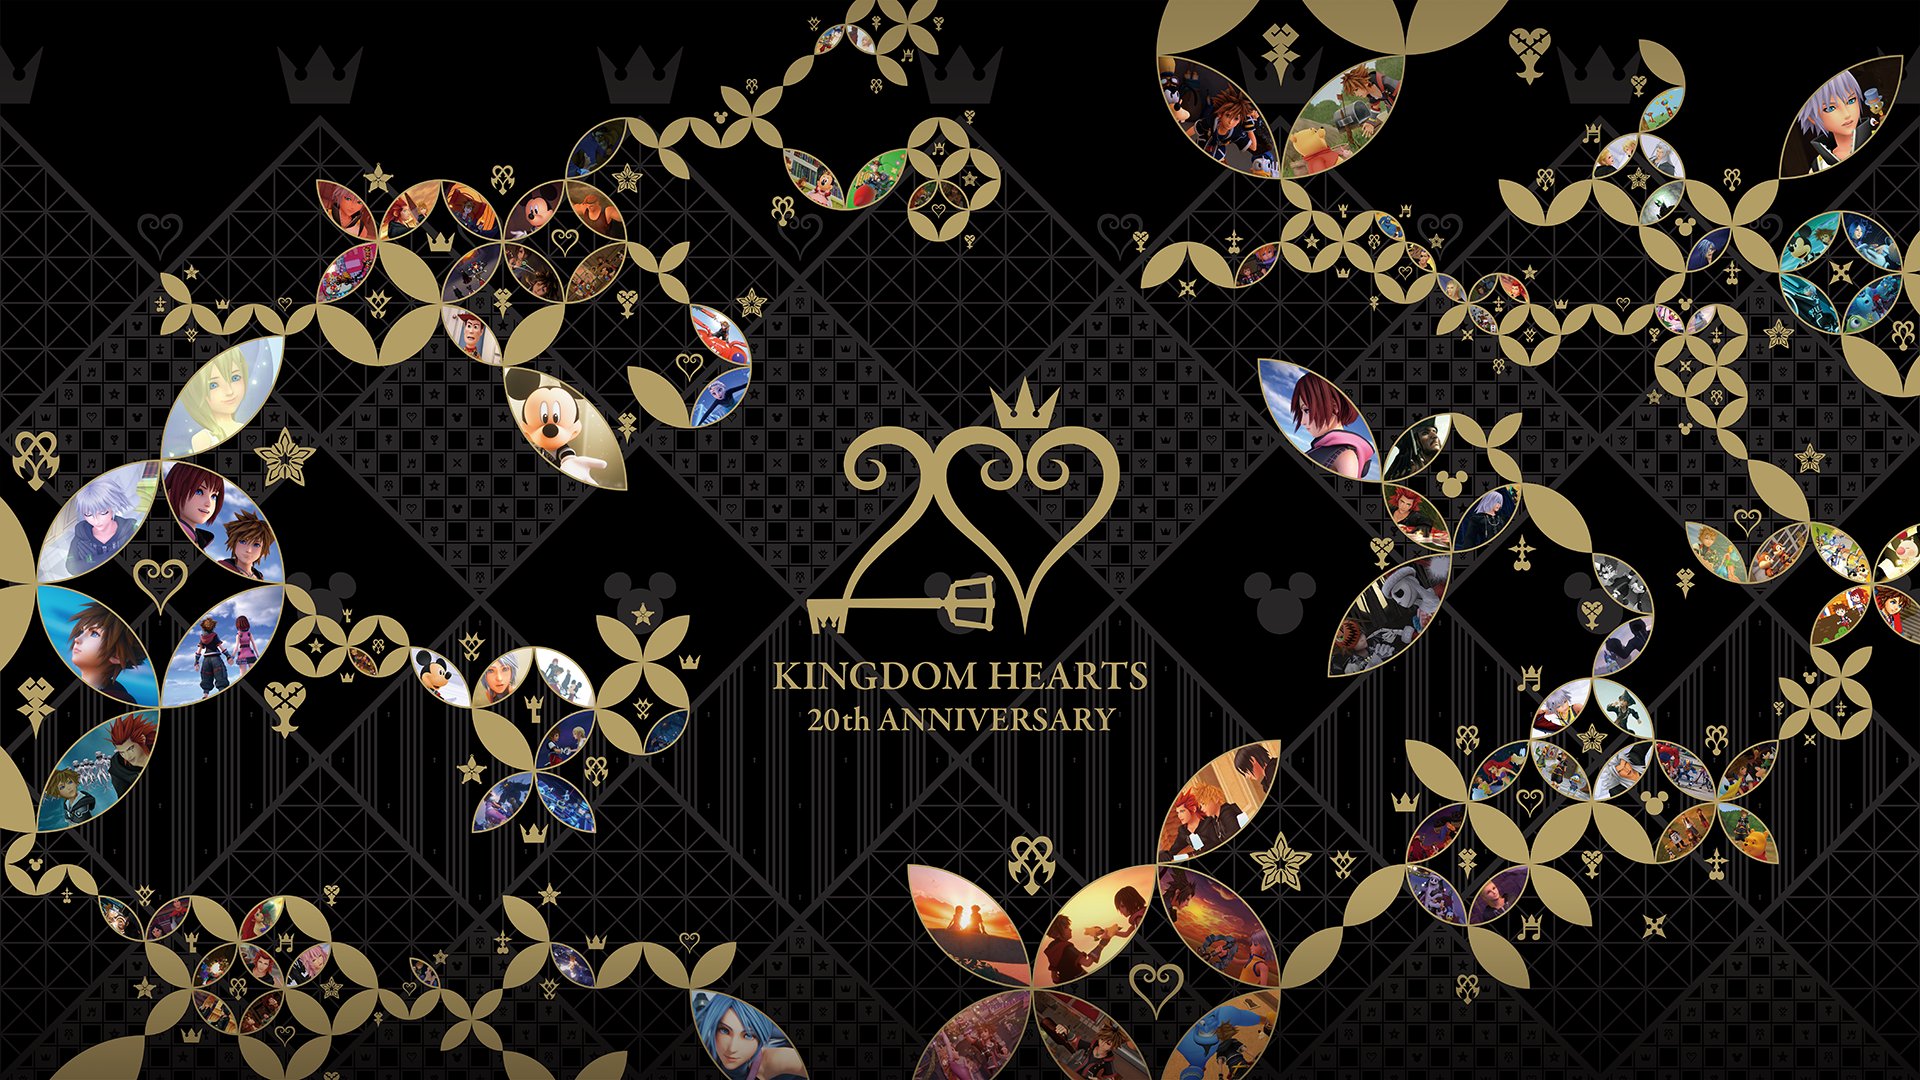 Kingdom hearts 2